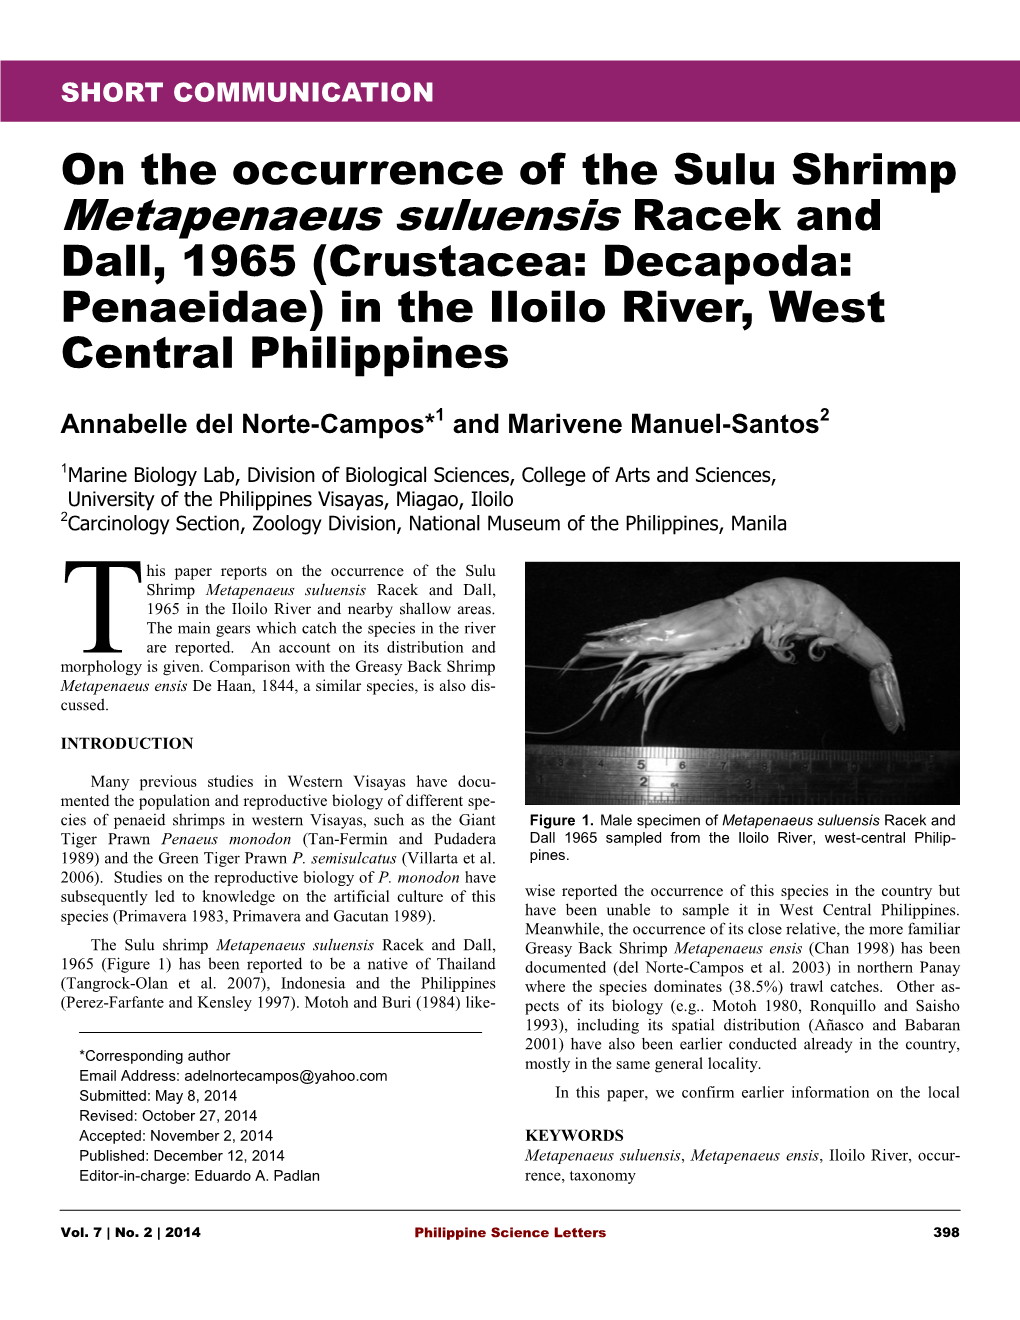 Metapenaeus Suluensis Racek and Dall, 1965 (Crustacea: Decapoda: Penaeidae) in the Iloilo River, West Central Philippines